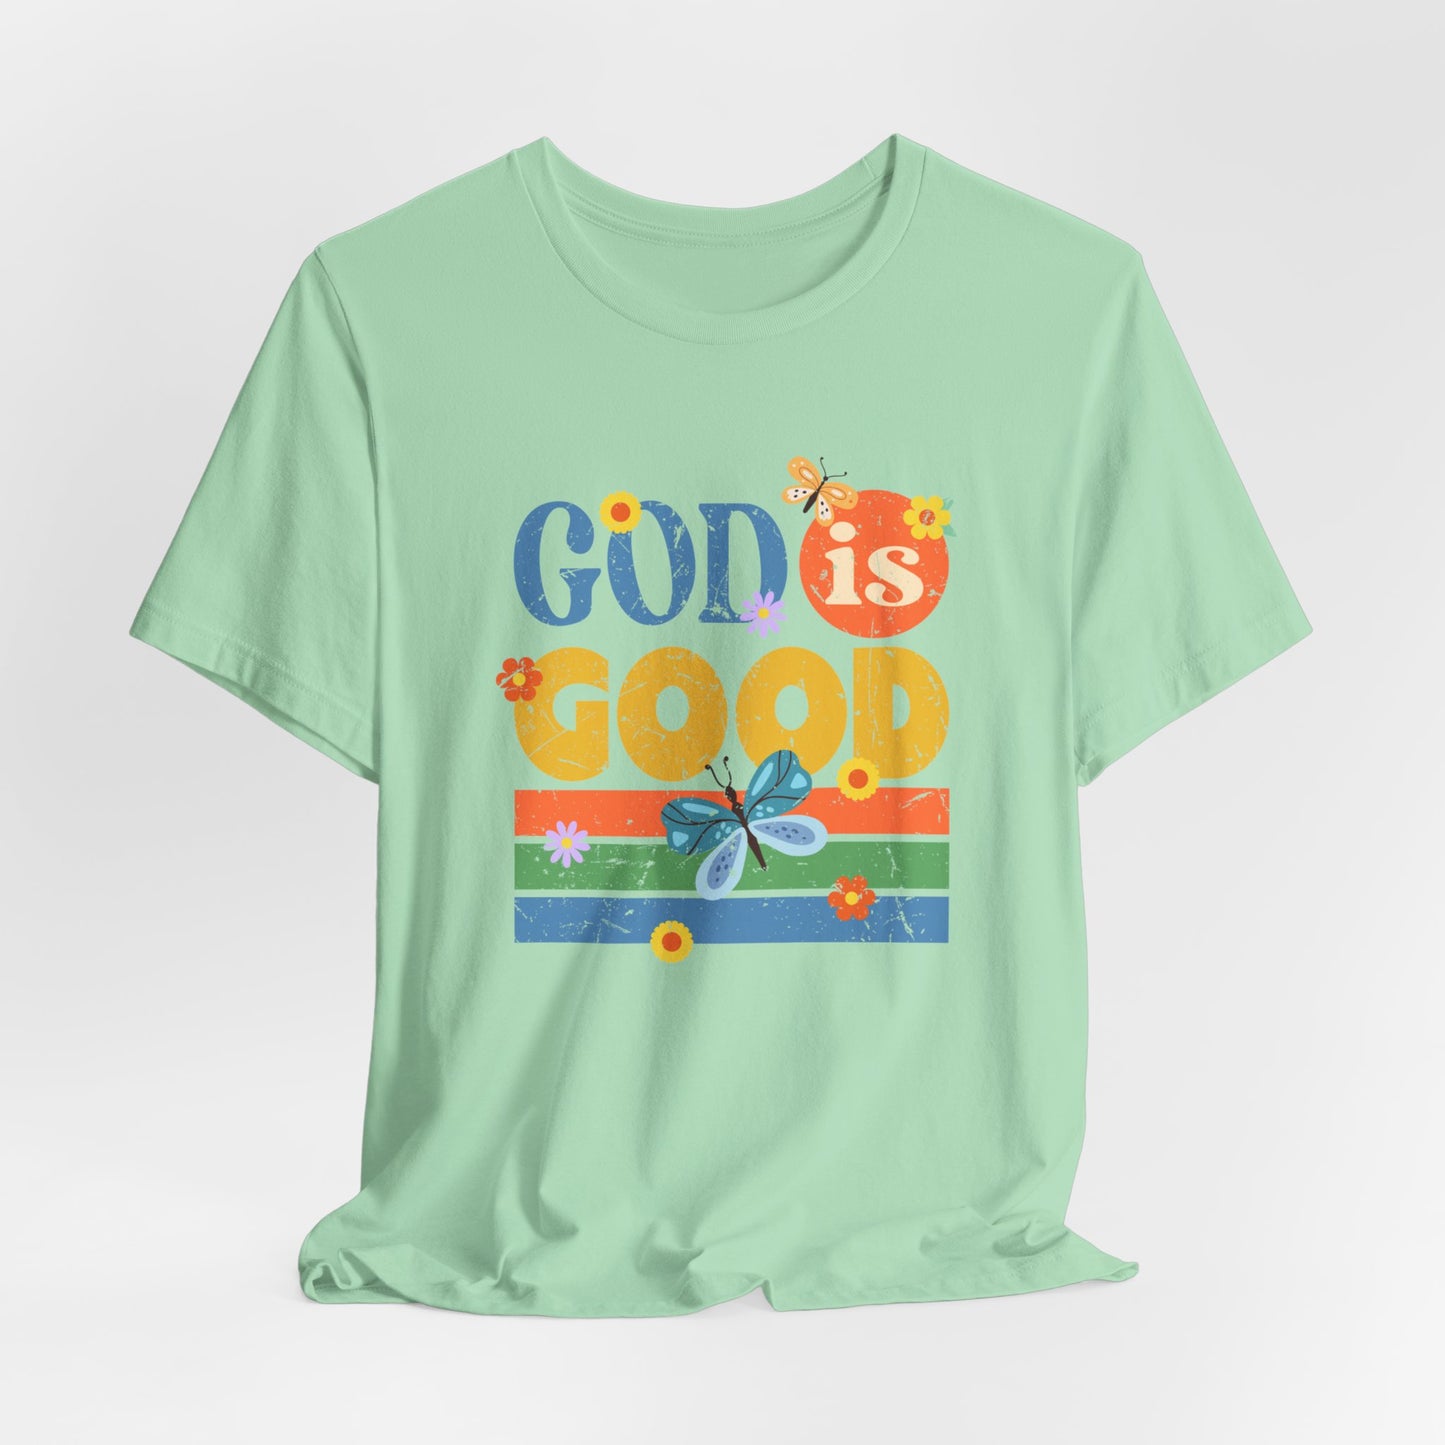 God is Good Retro Style Tee